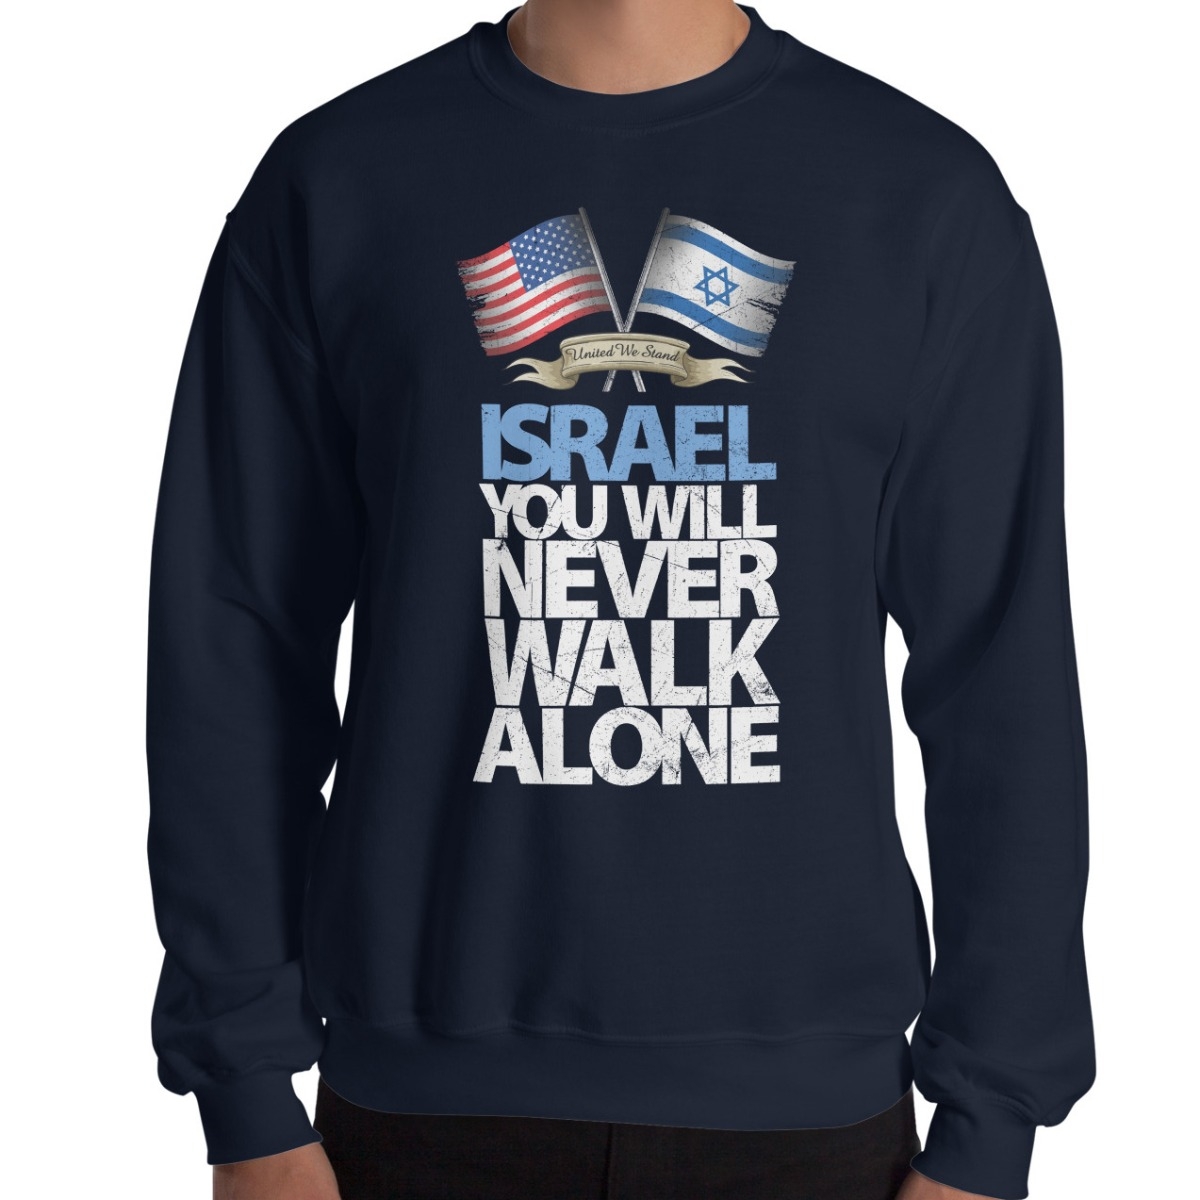 Israel Will Never Walk Alone - Unisex Sweatshirt - 1